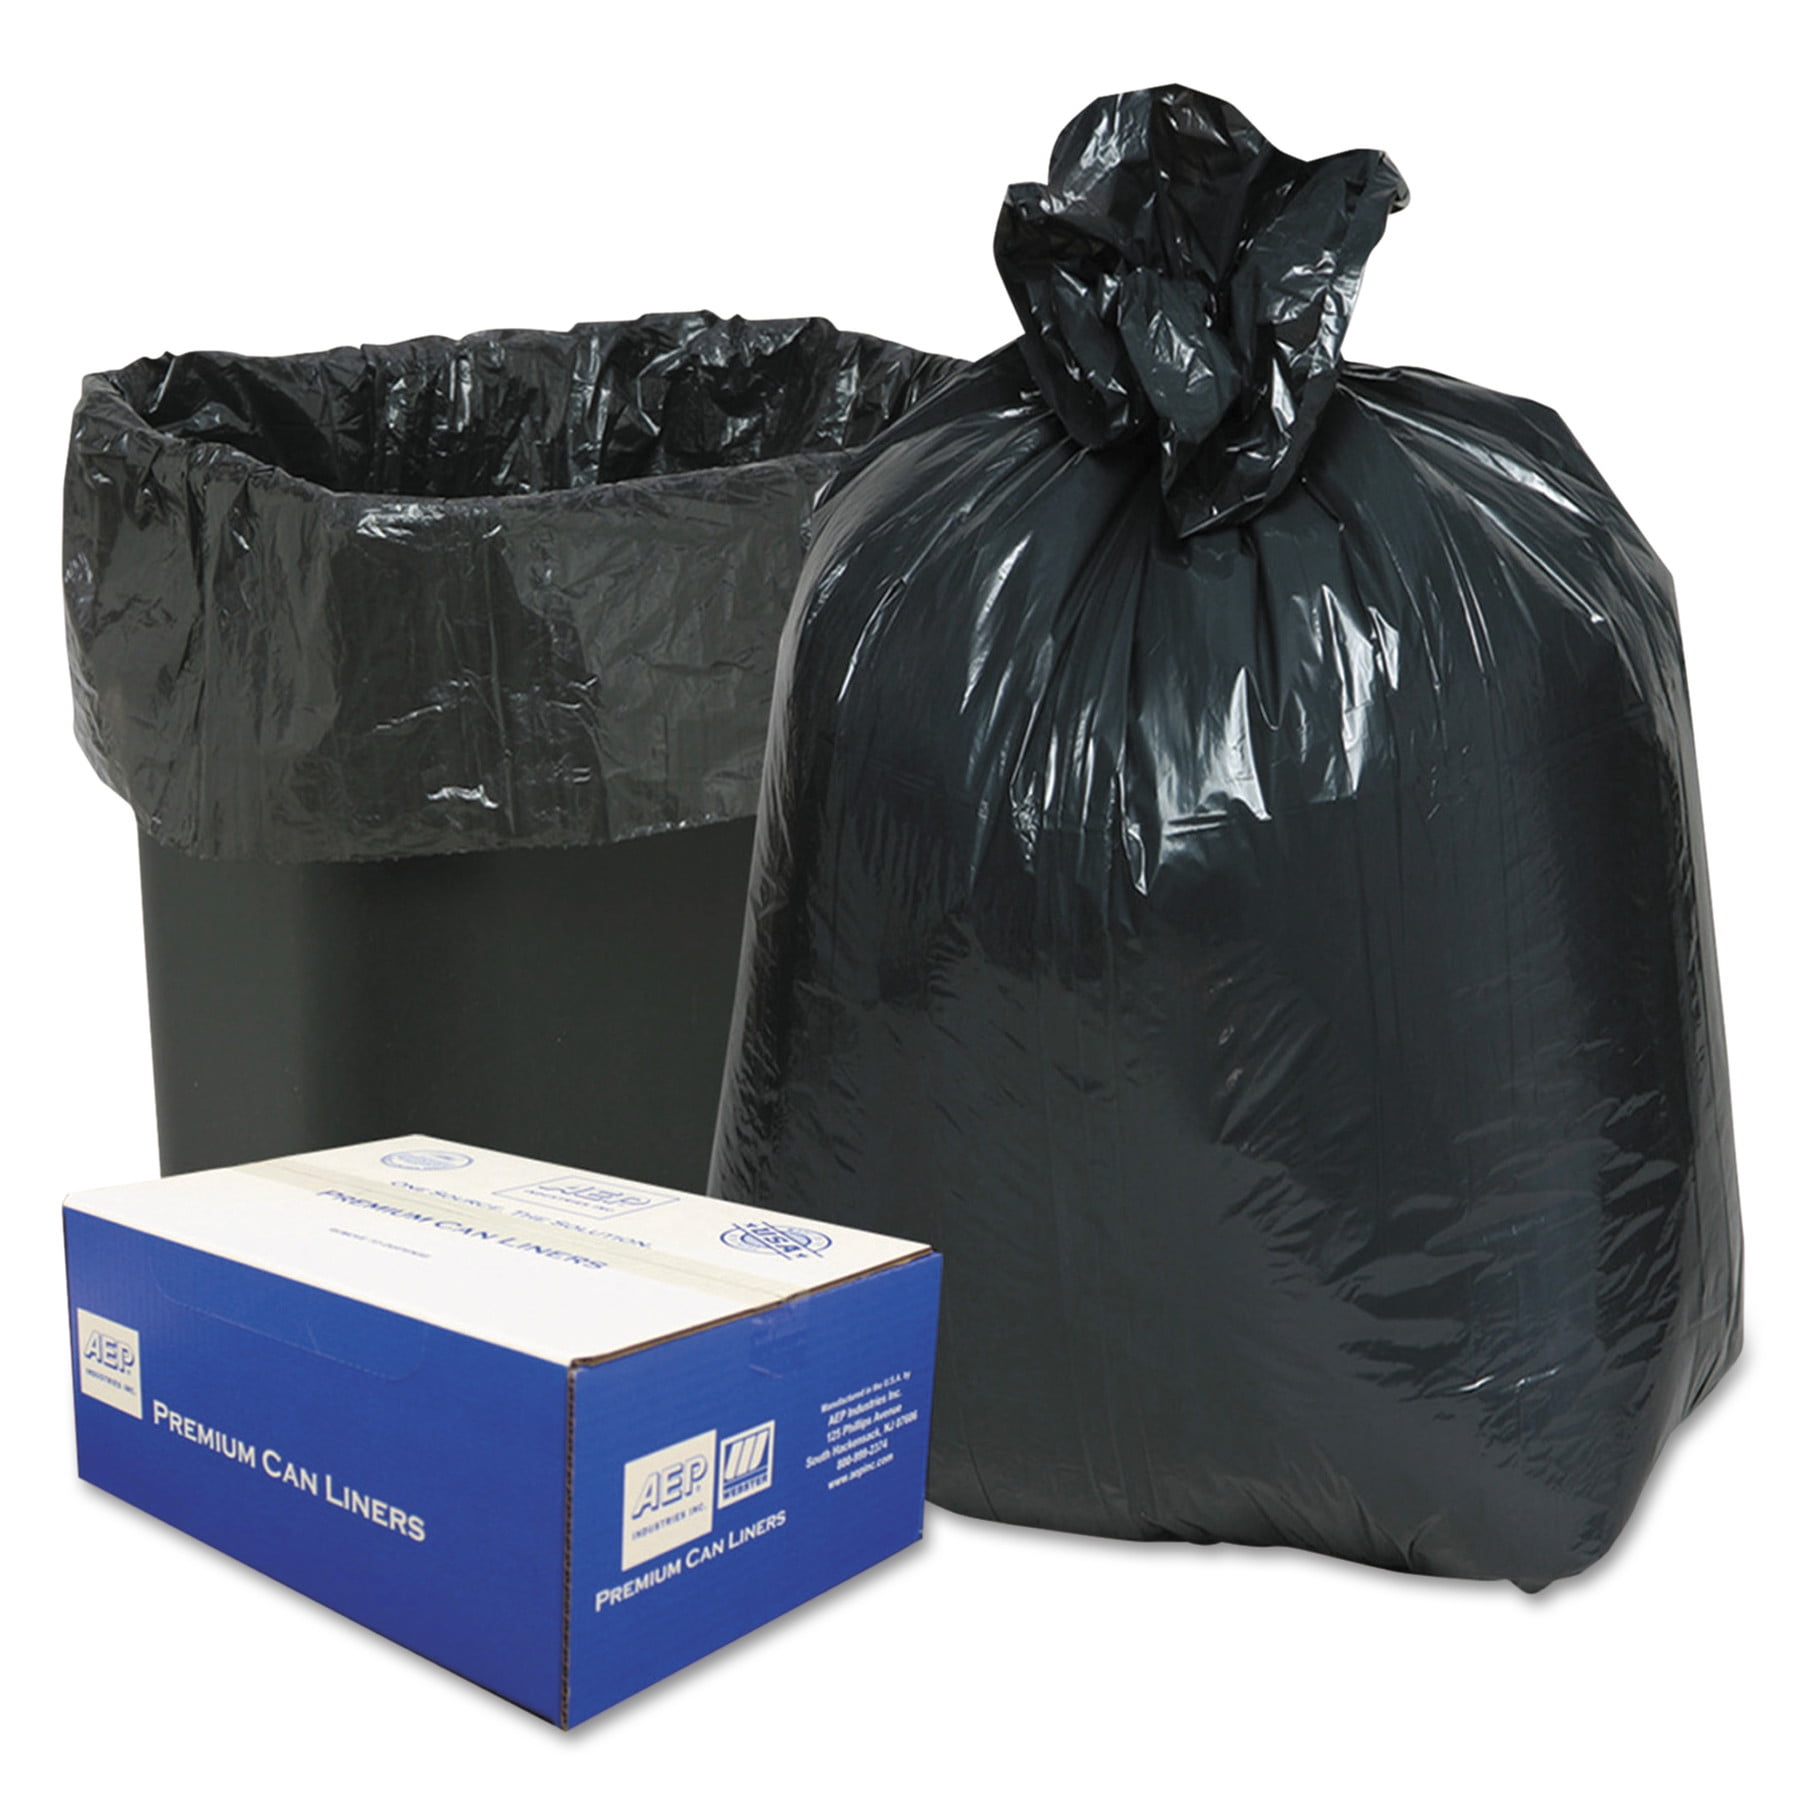 RW Clean 20 gal Black Plastic Trash Can Liner - Standard-Duty, 0.7 mil -  200 count box